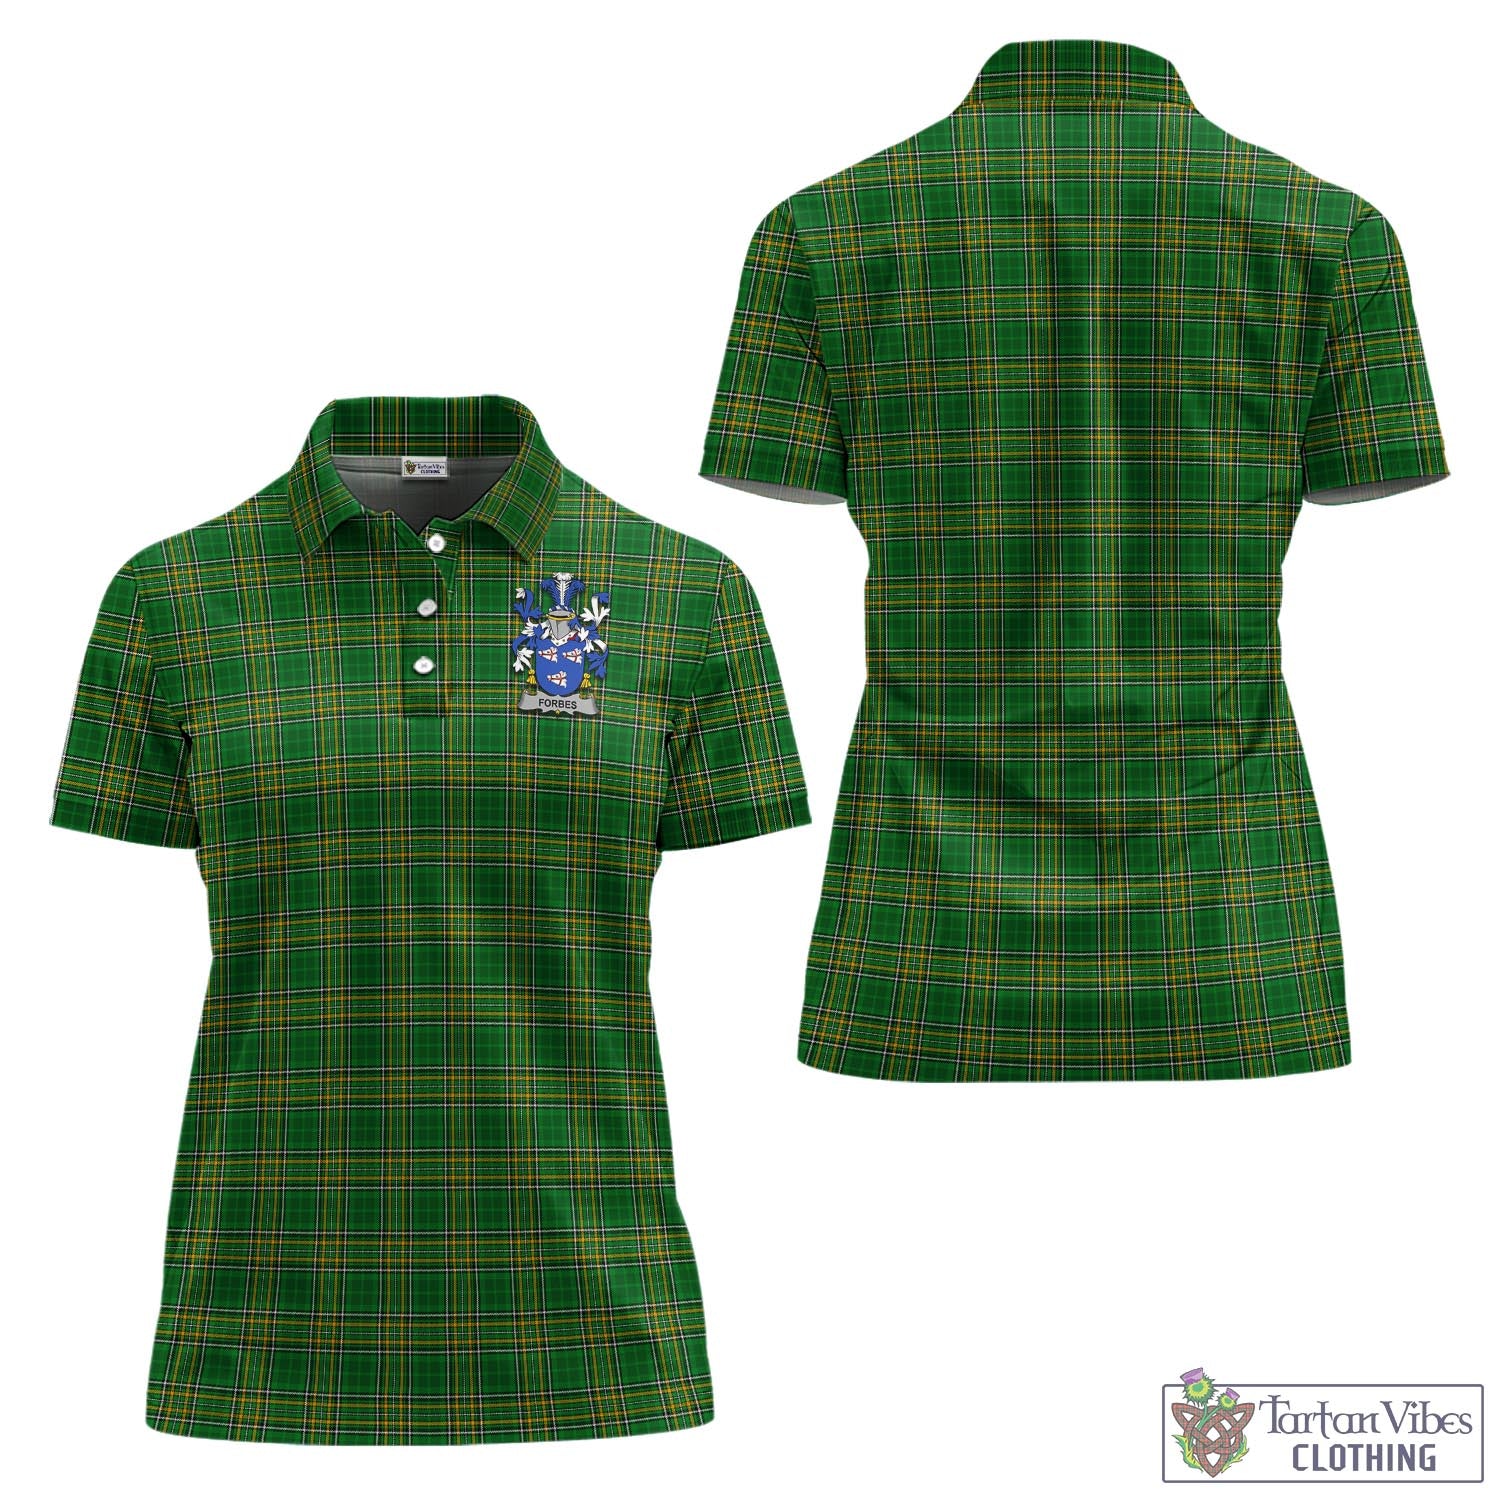 Tartan Vibes Clothing Forbes Ireland Clan Tartan Women's Polo Shirt with Coat of Arms